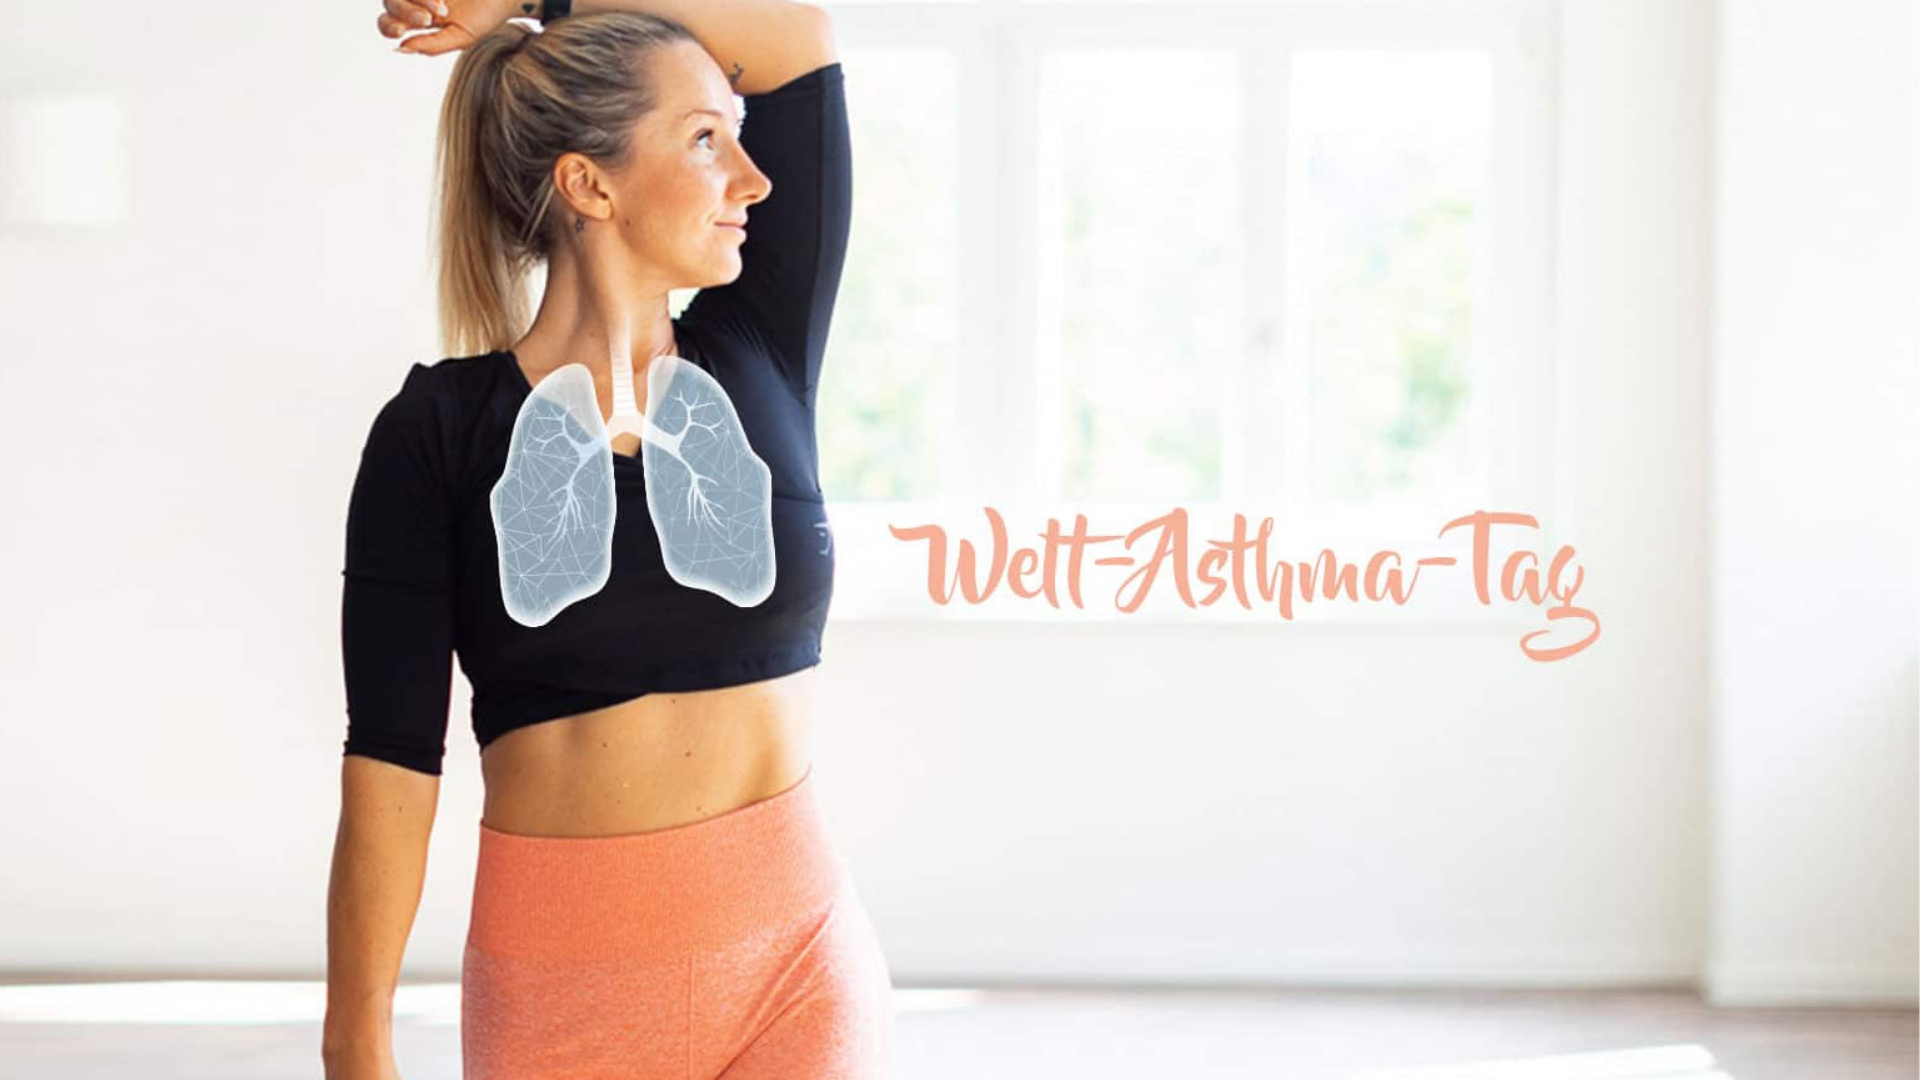 Welt-Asthma-Tag-2021-asthamtiker-lungenkrank-bosch-vivatmo-me-feno-sport-asthma